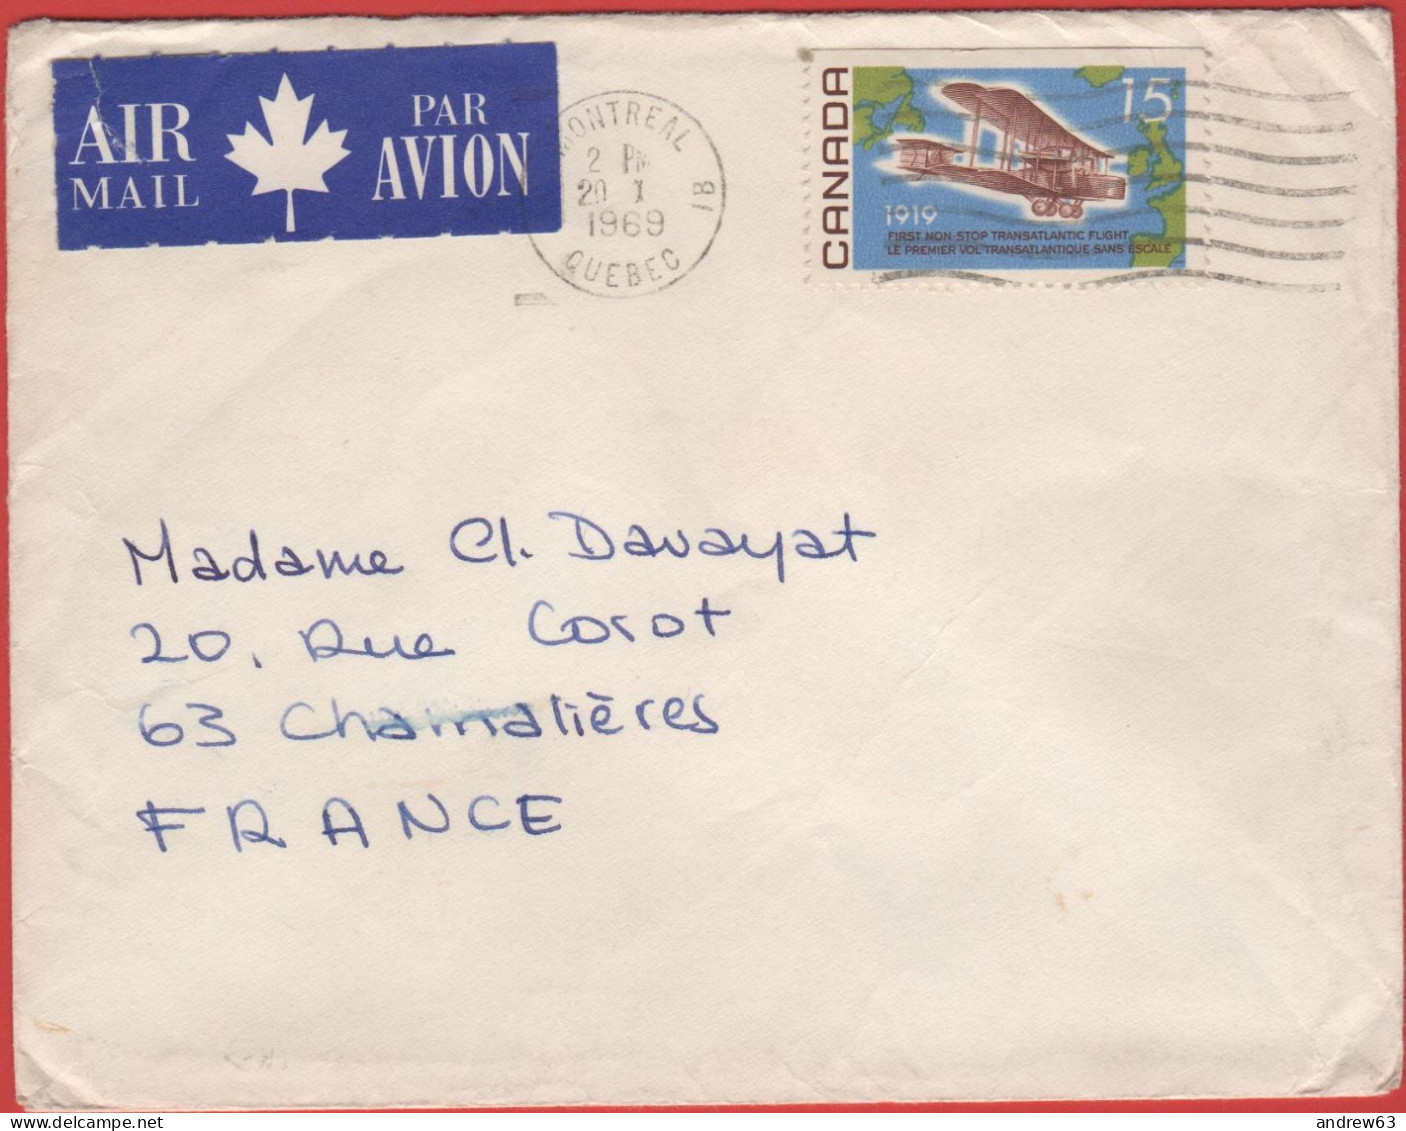 CANADA - 1969 - 15c First Non Stop Transatlantic Flight - Air Mail - Viaggiata Da Montreal Per Chamalières, France - Storia Postale